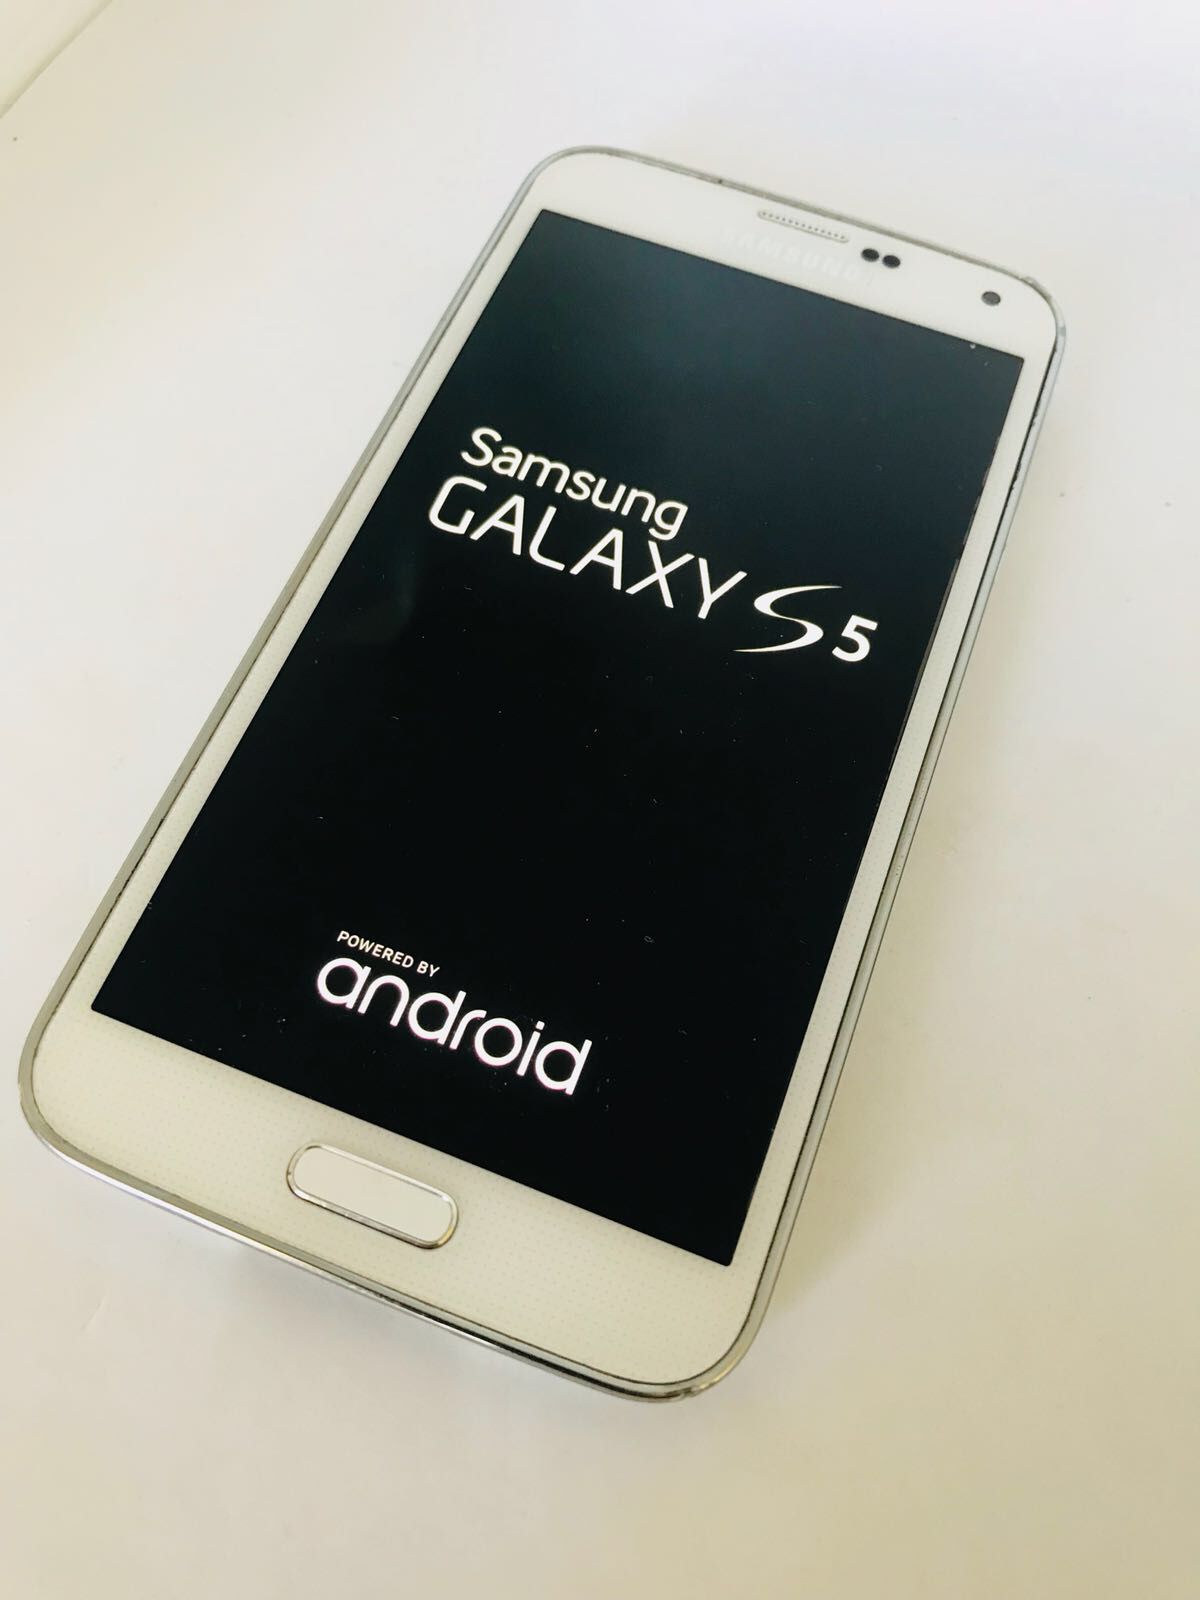 Samsung Galaxy S5 16Gb white Unlocked (Read Description)